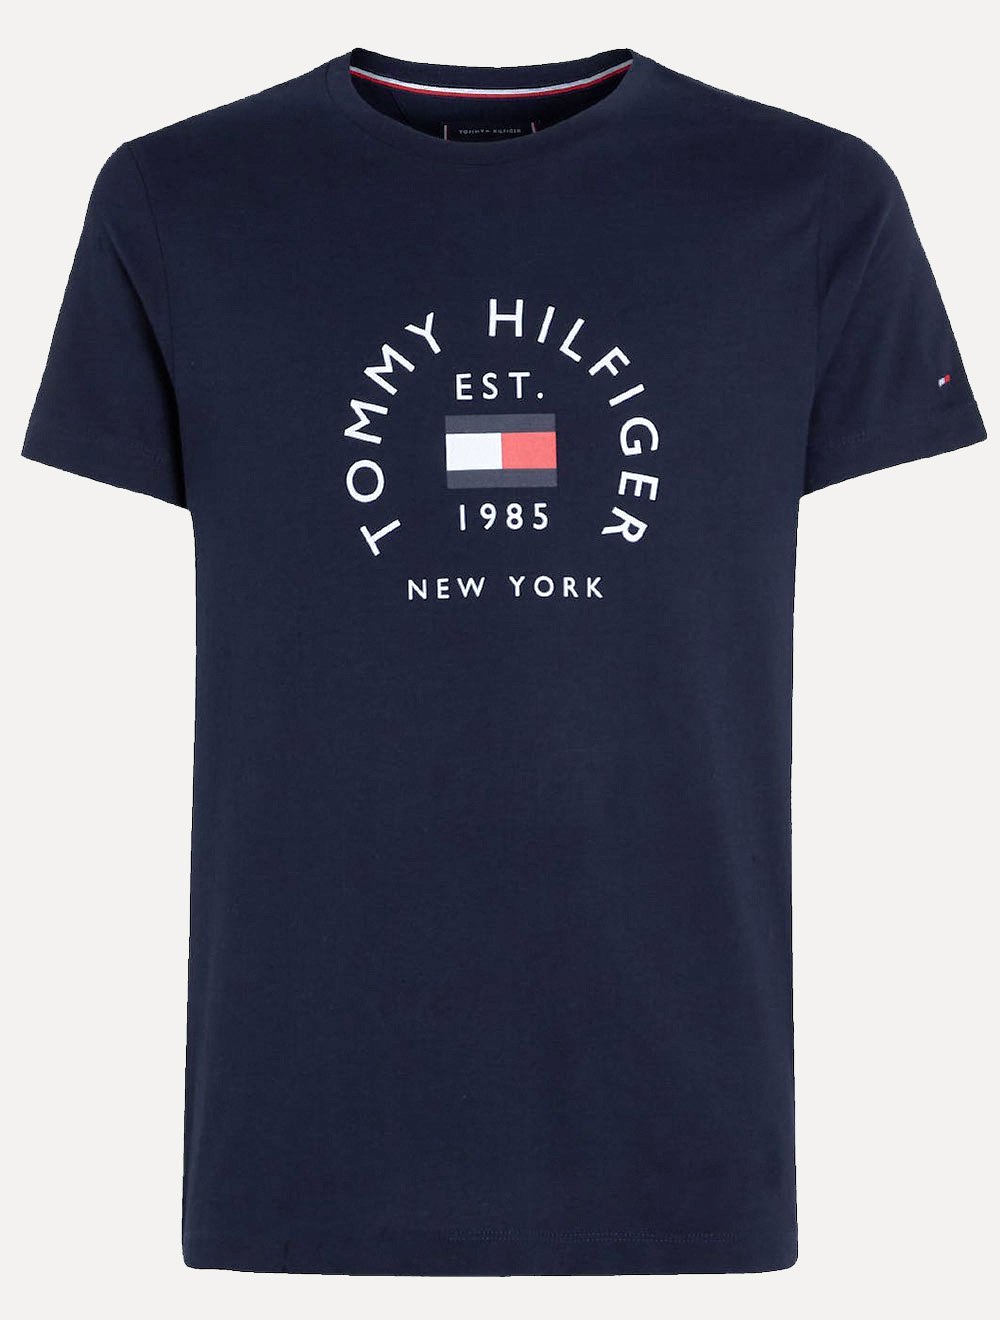 Camiseta Tommy Hilfiger Masculina Essential Cotton Preta 